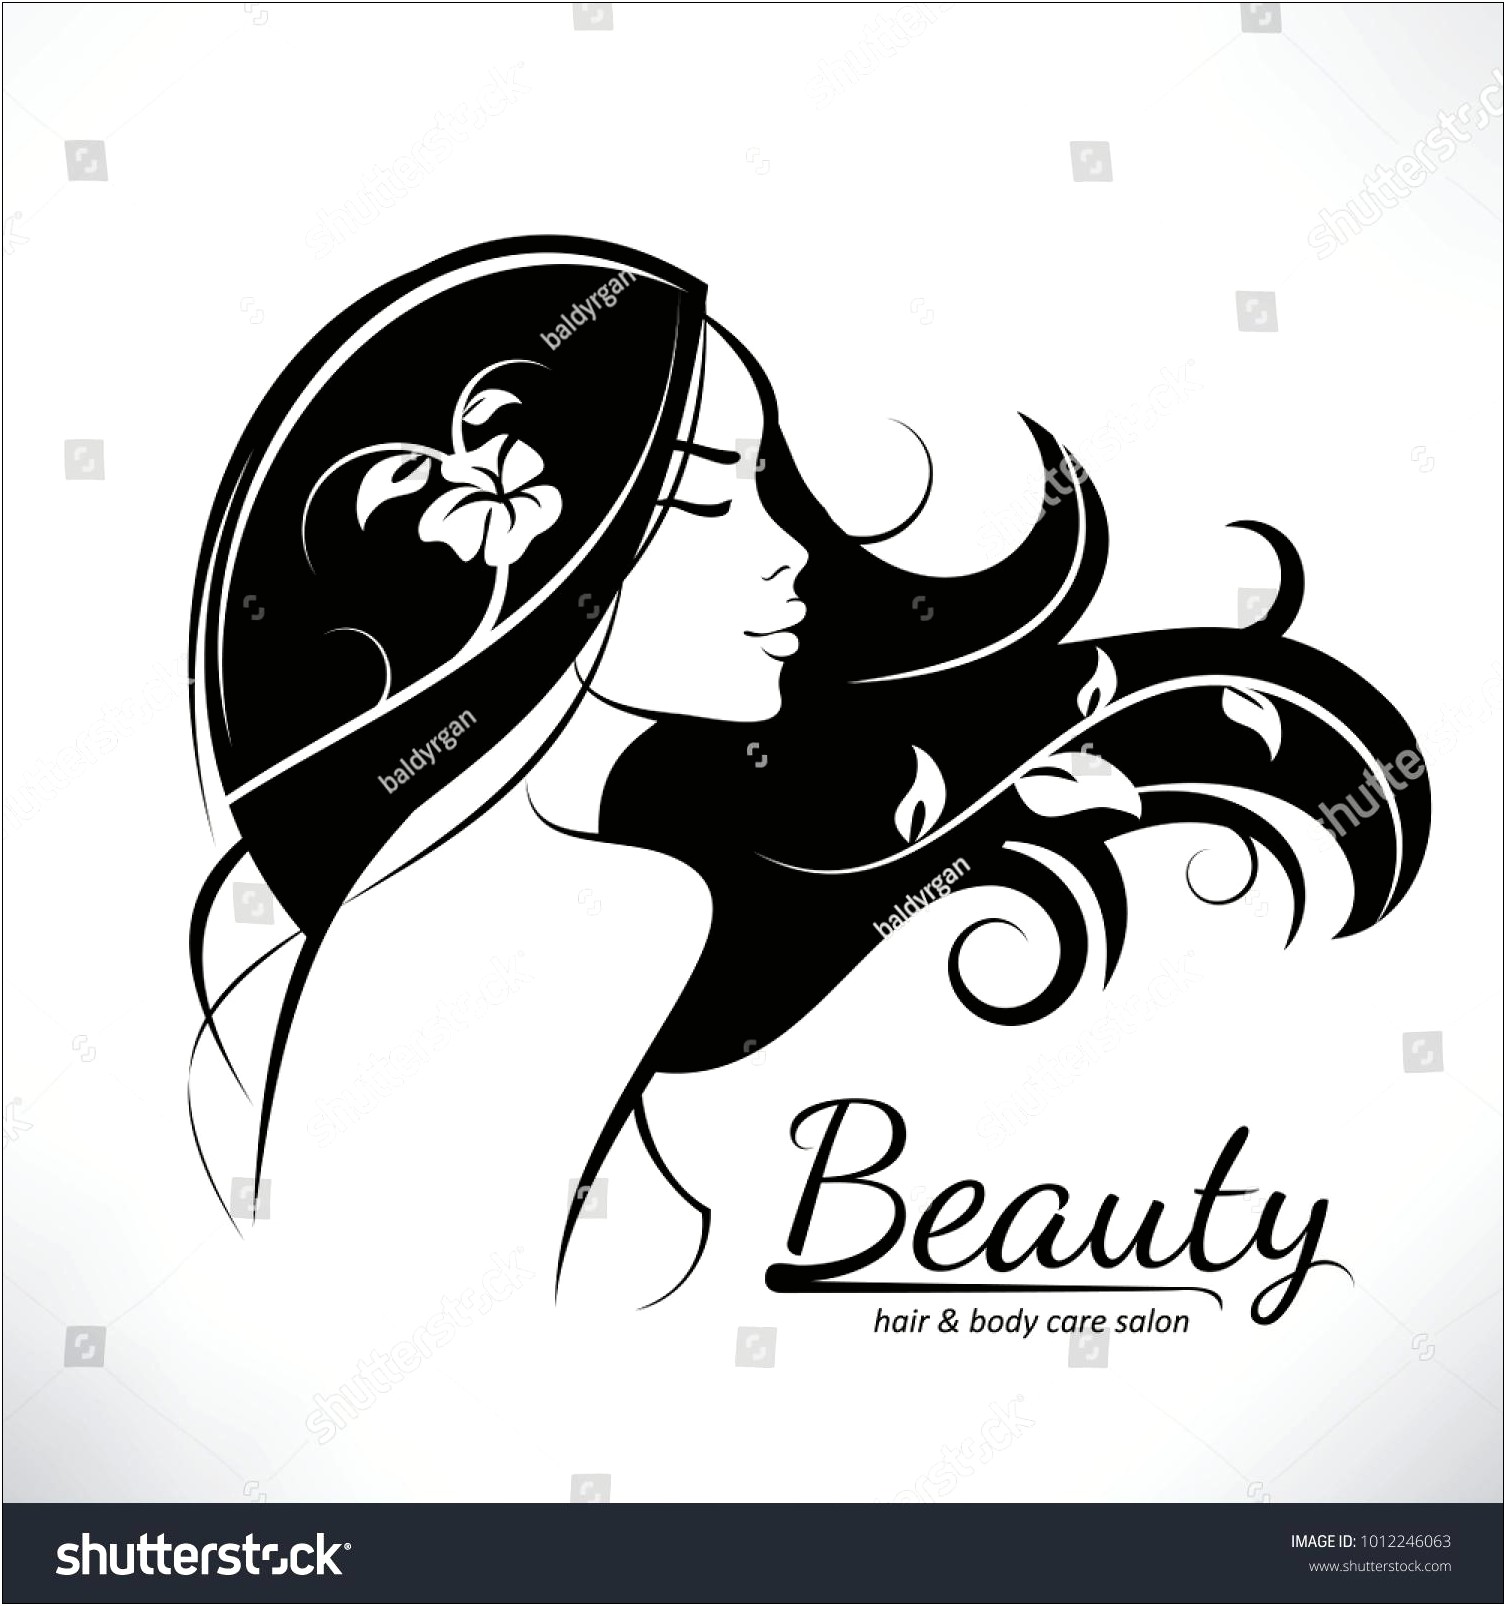 Download Adobe Illustrator Template For Hairsalon Logo